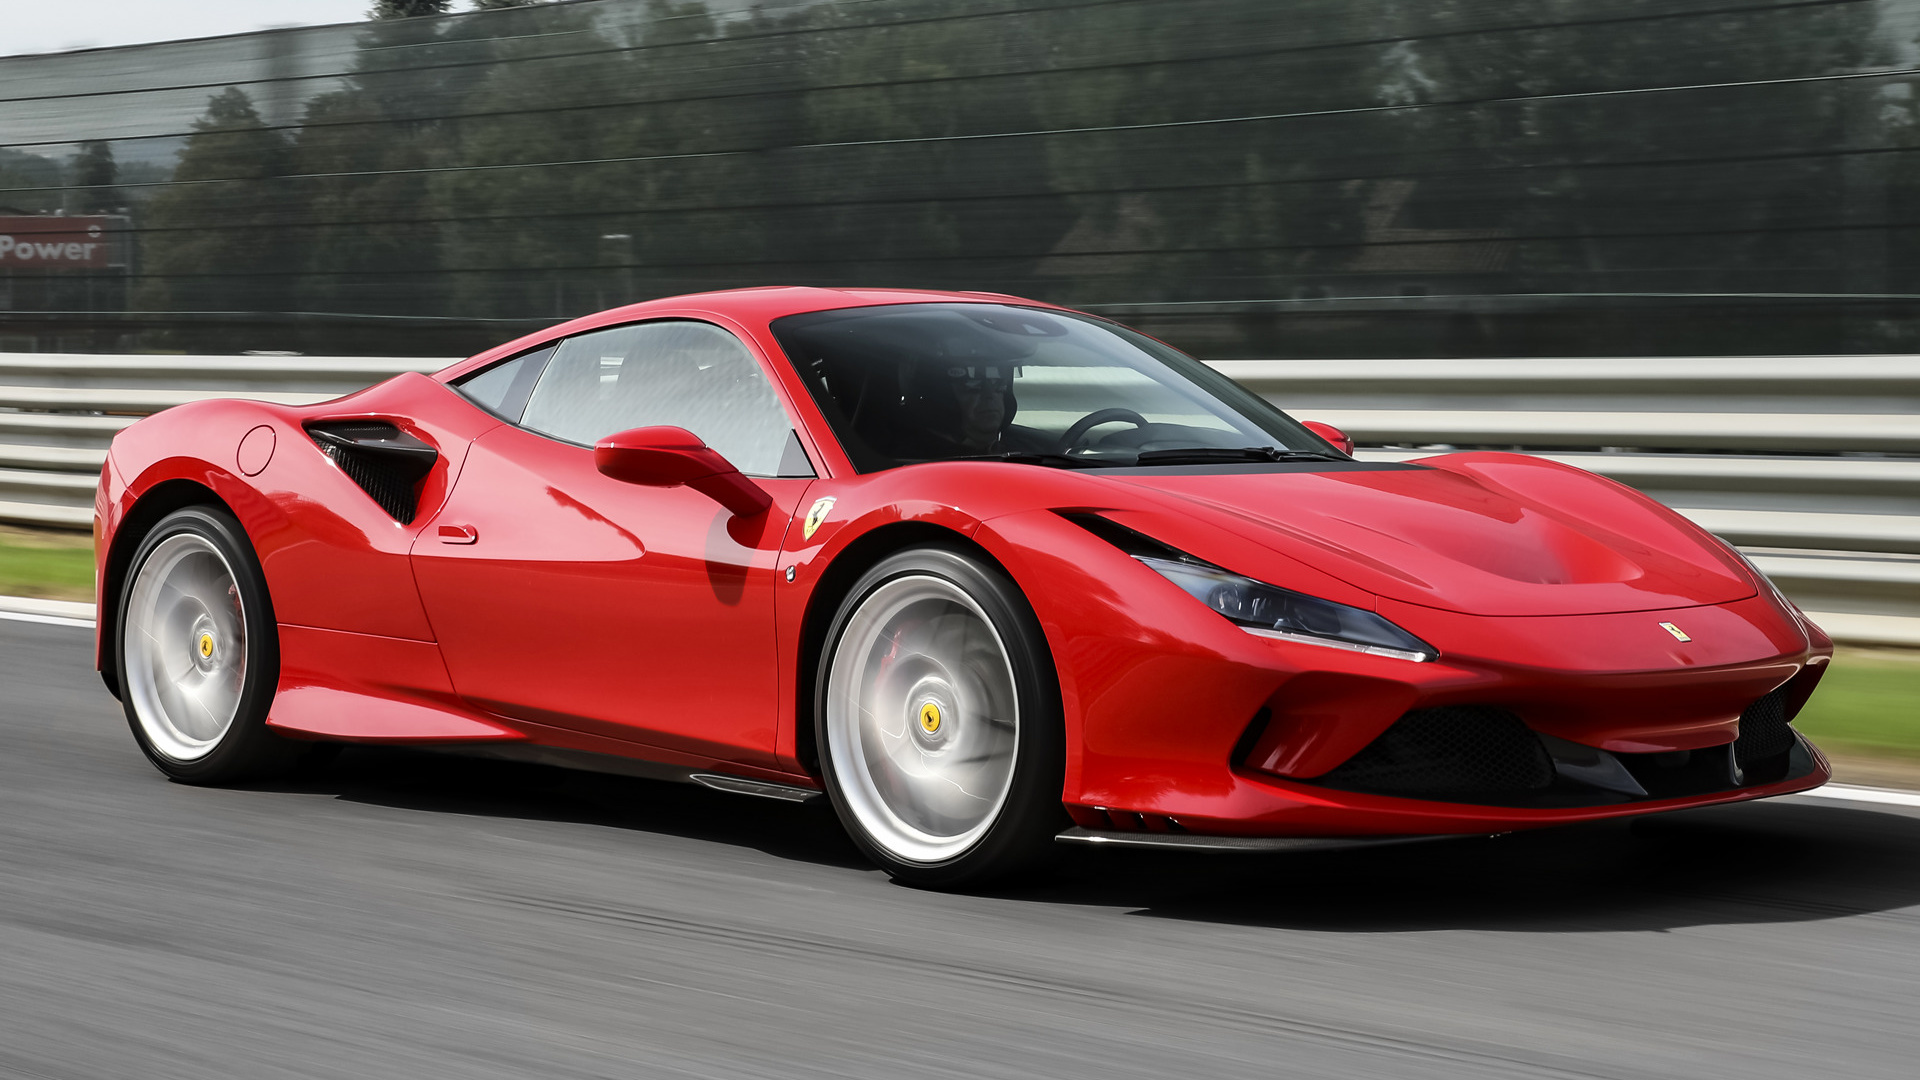 Ferrari Supercars: News, Pictures, Models & History